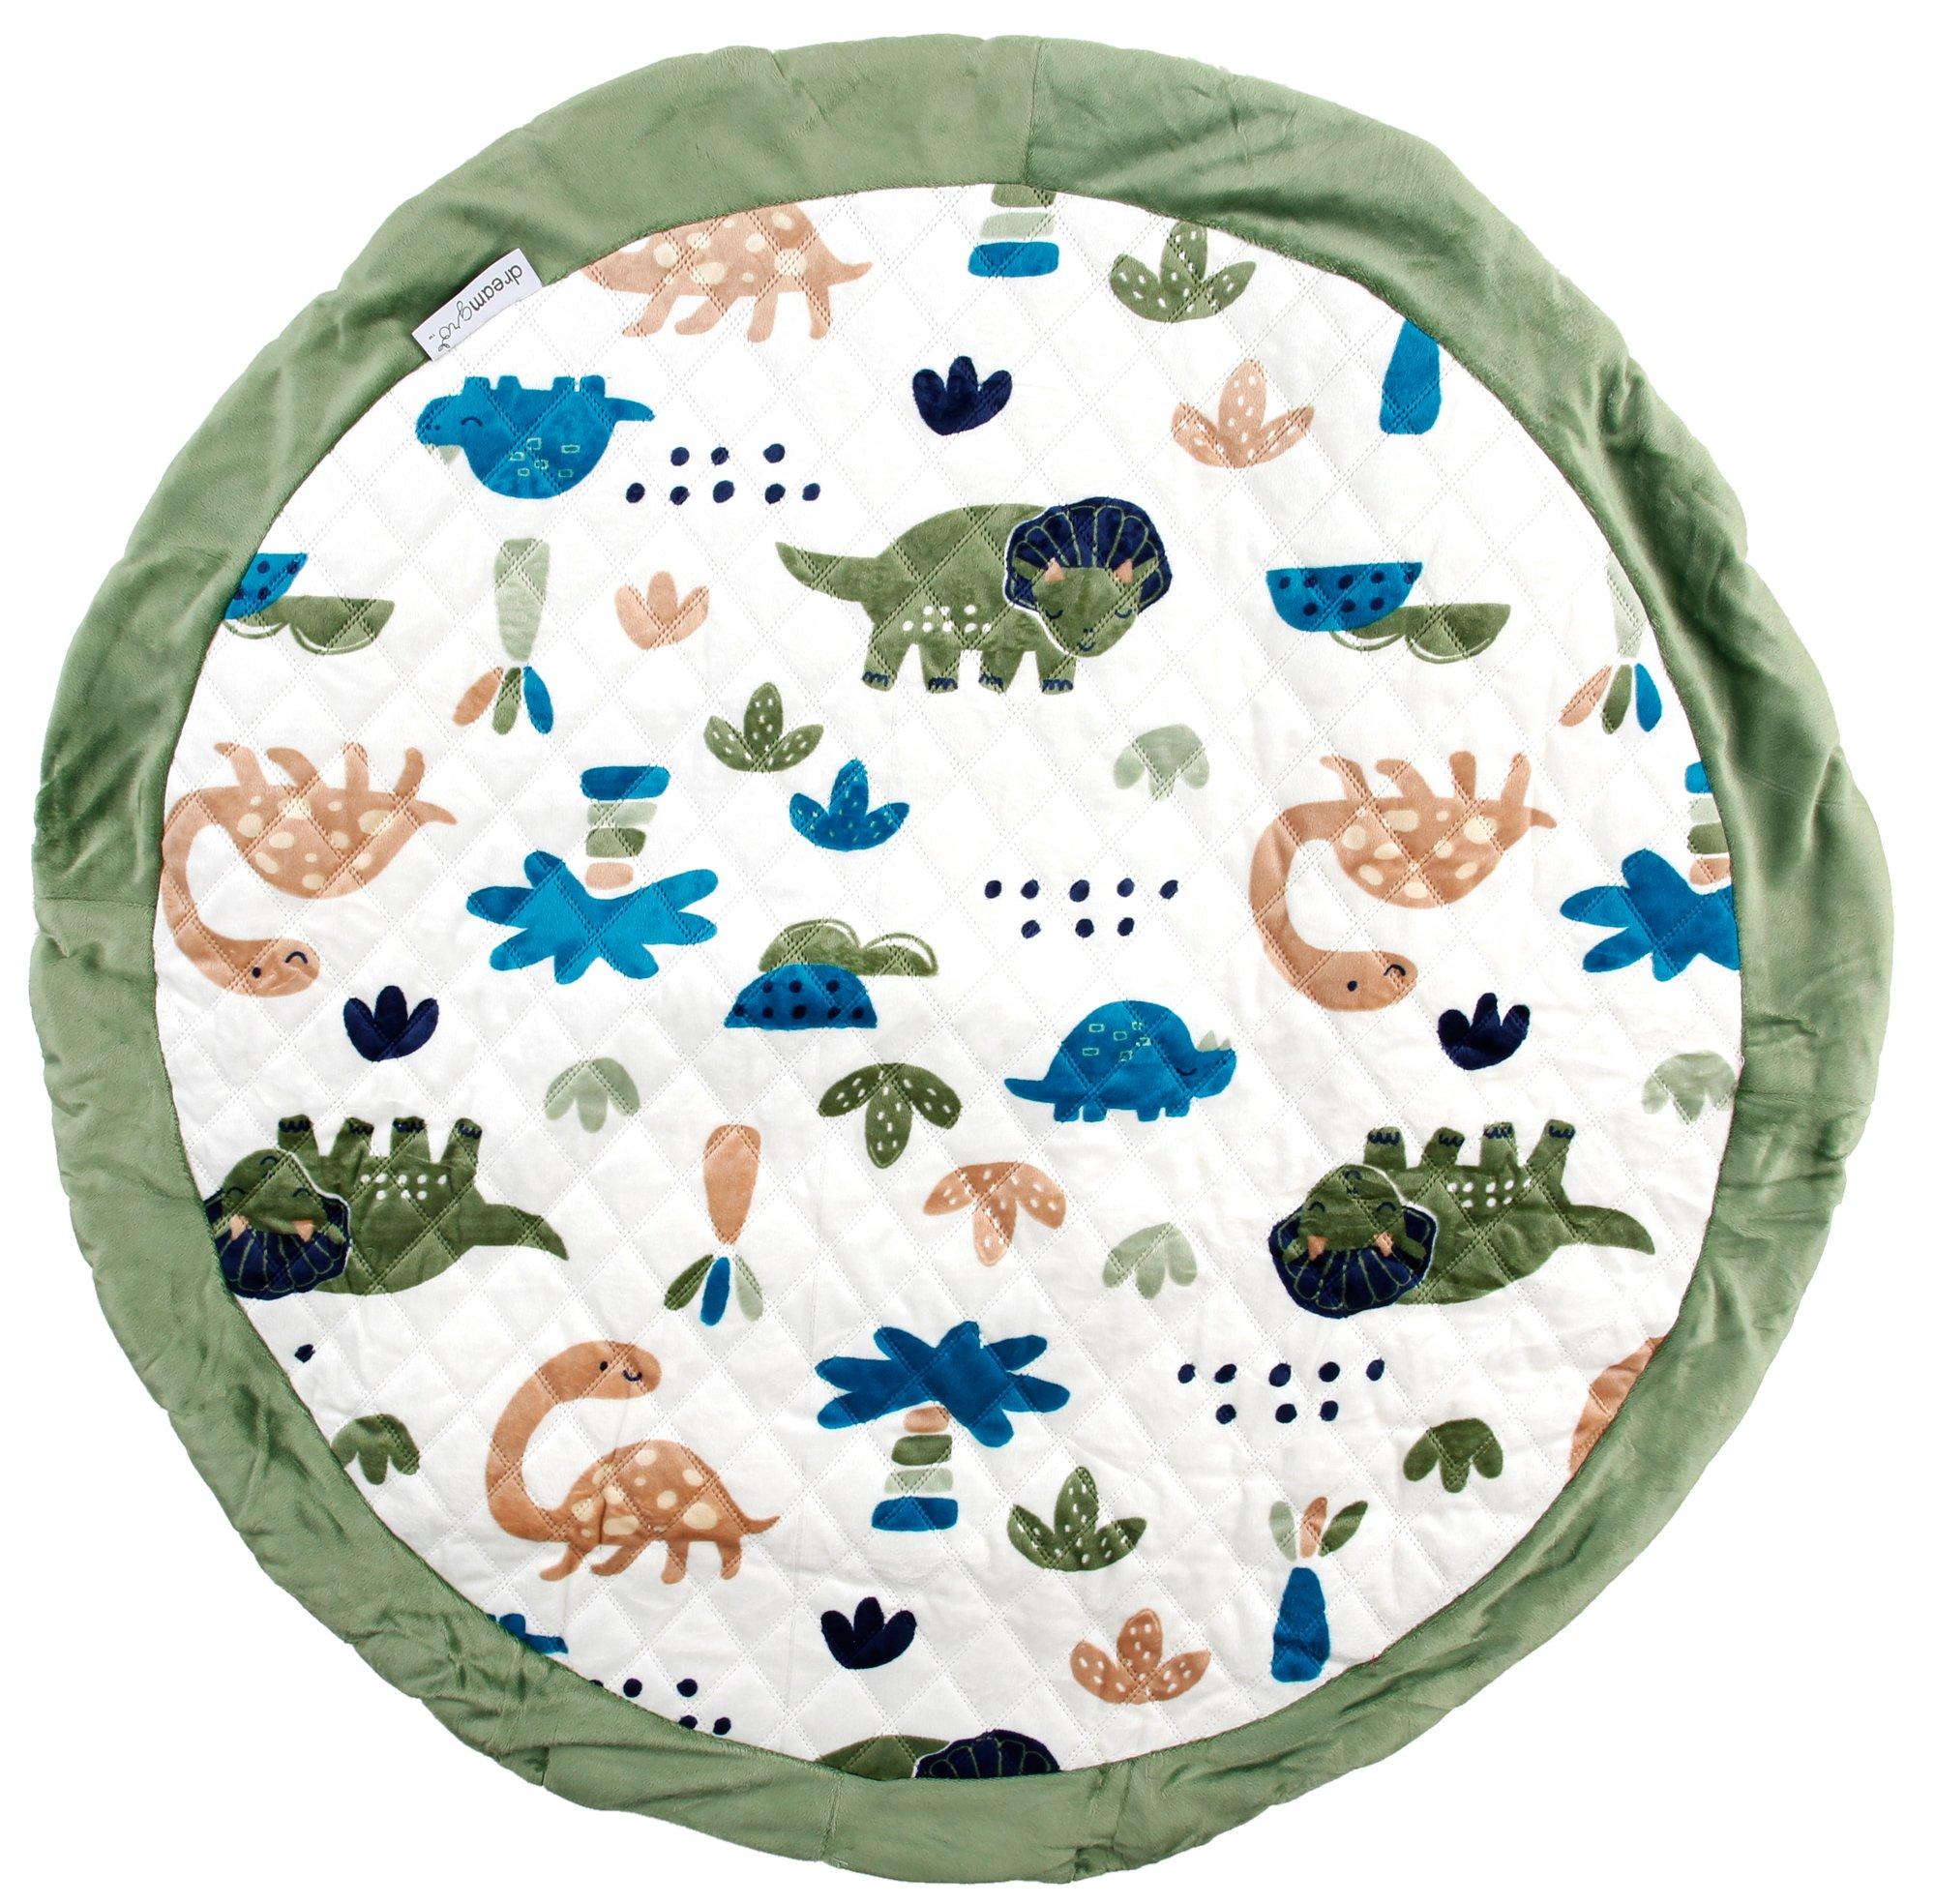 36 in Dino Print Round Baby Plush Playmat